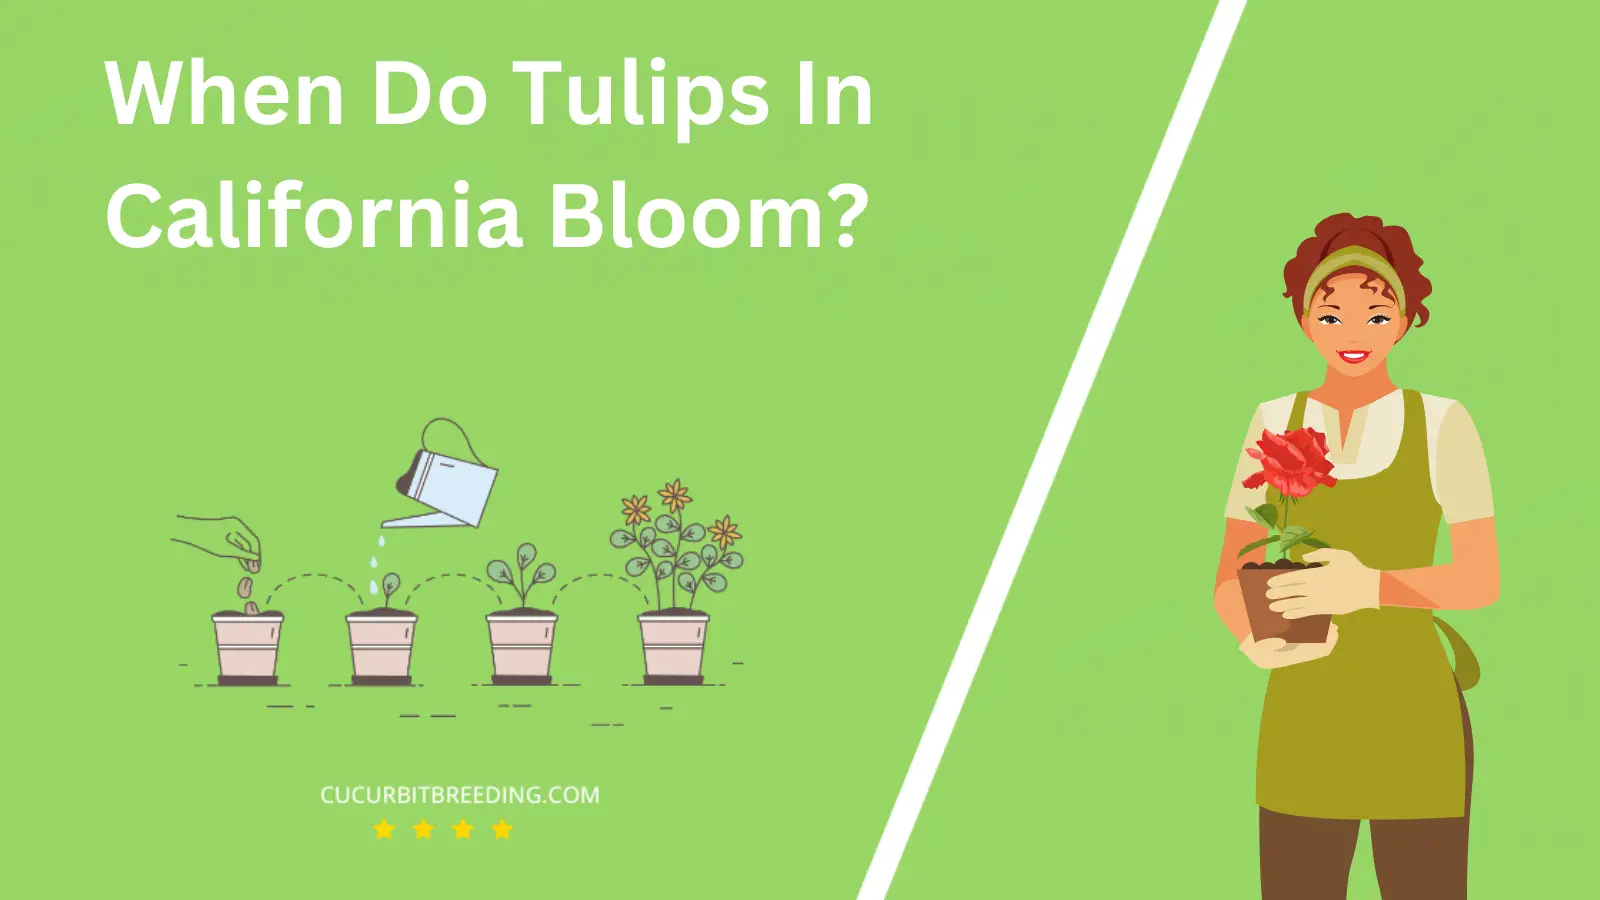 When Do Tulips In California Bloom?